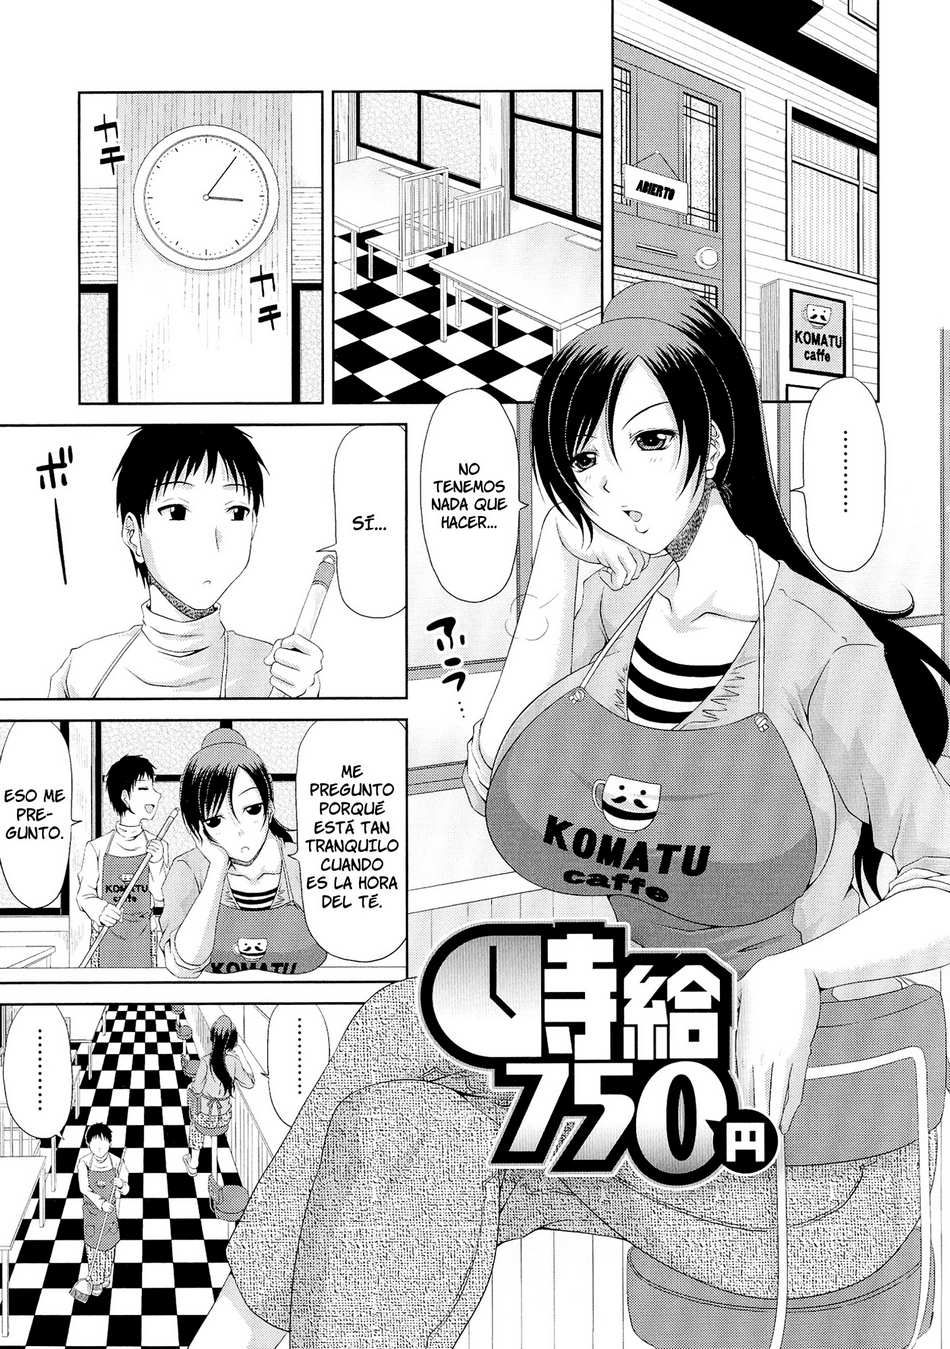 750 yenes la hora - Page #1